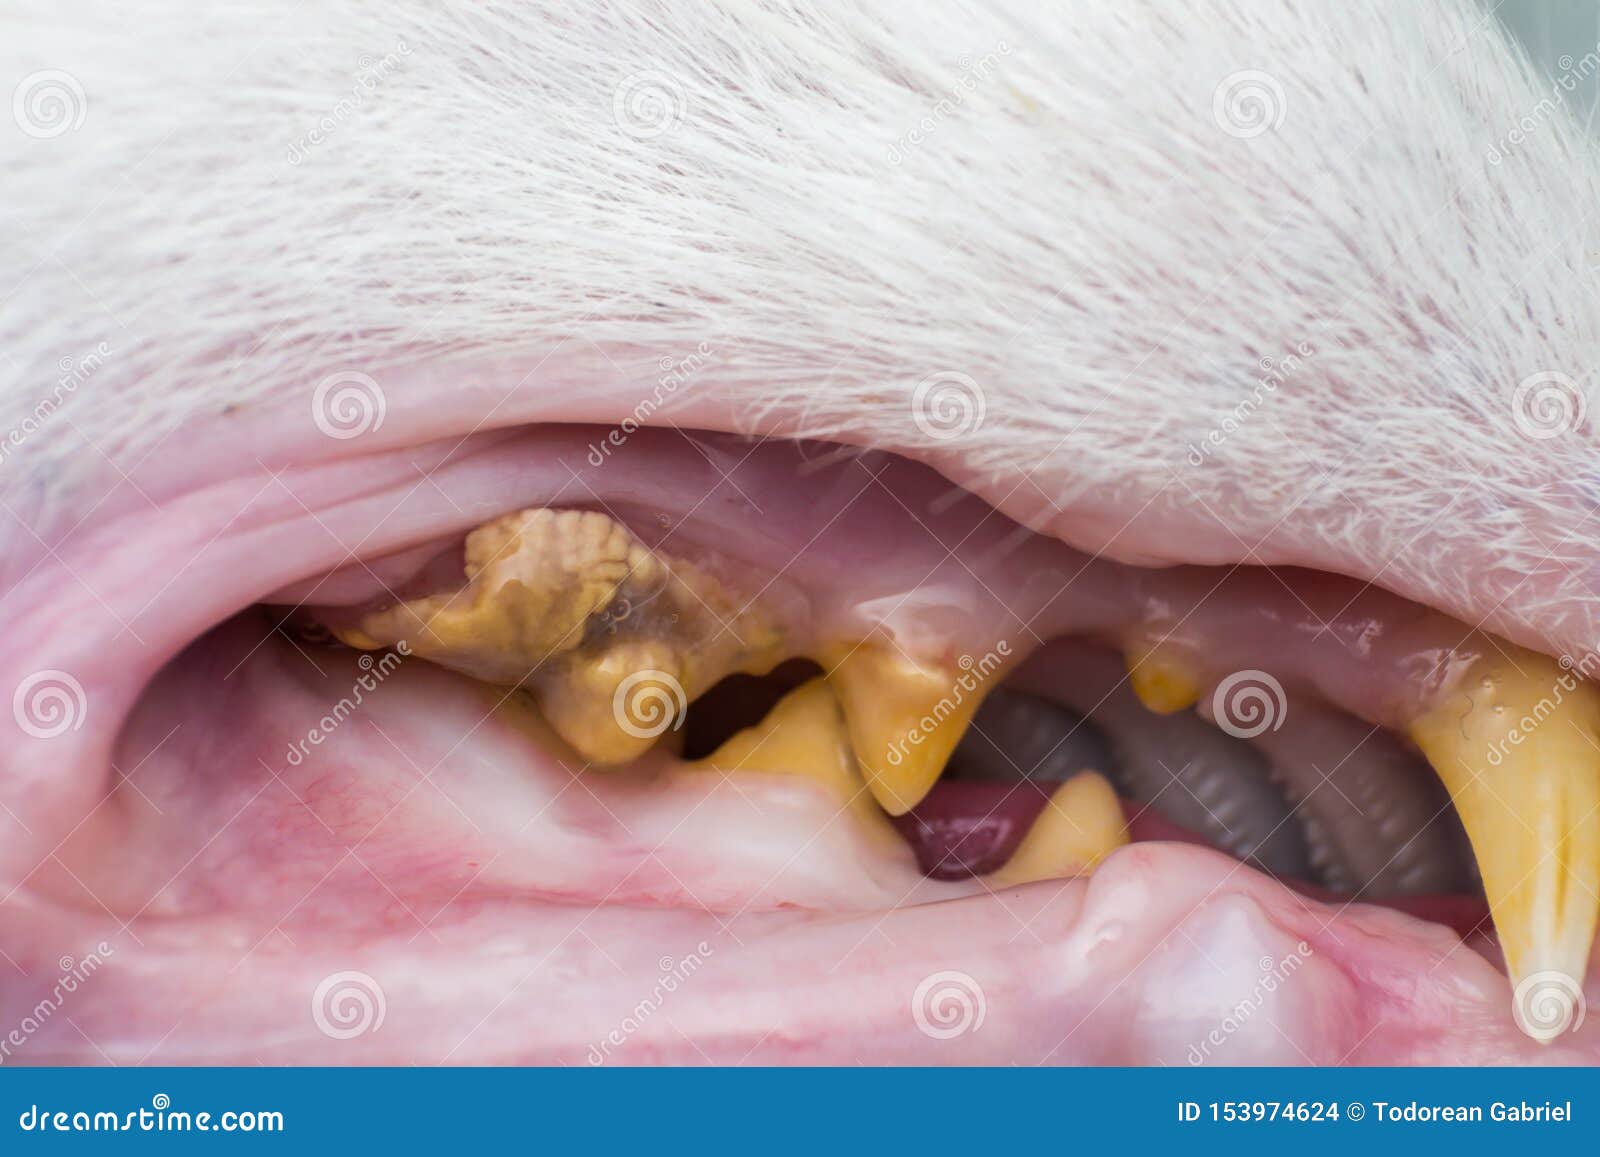 cat teeth tartar gum retraction 153974624